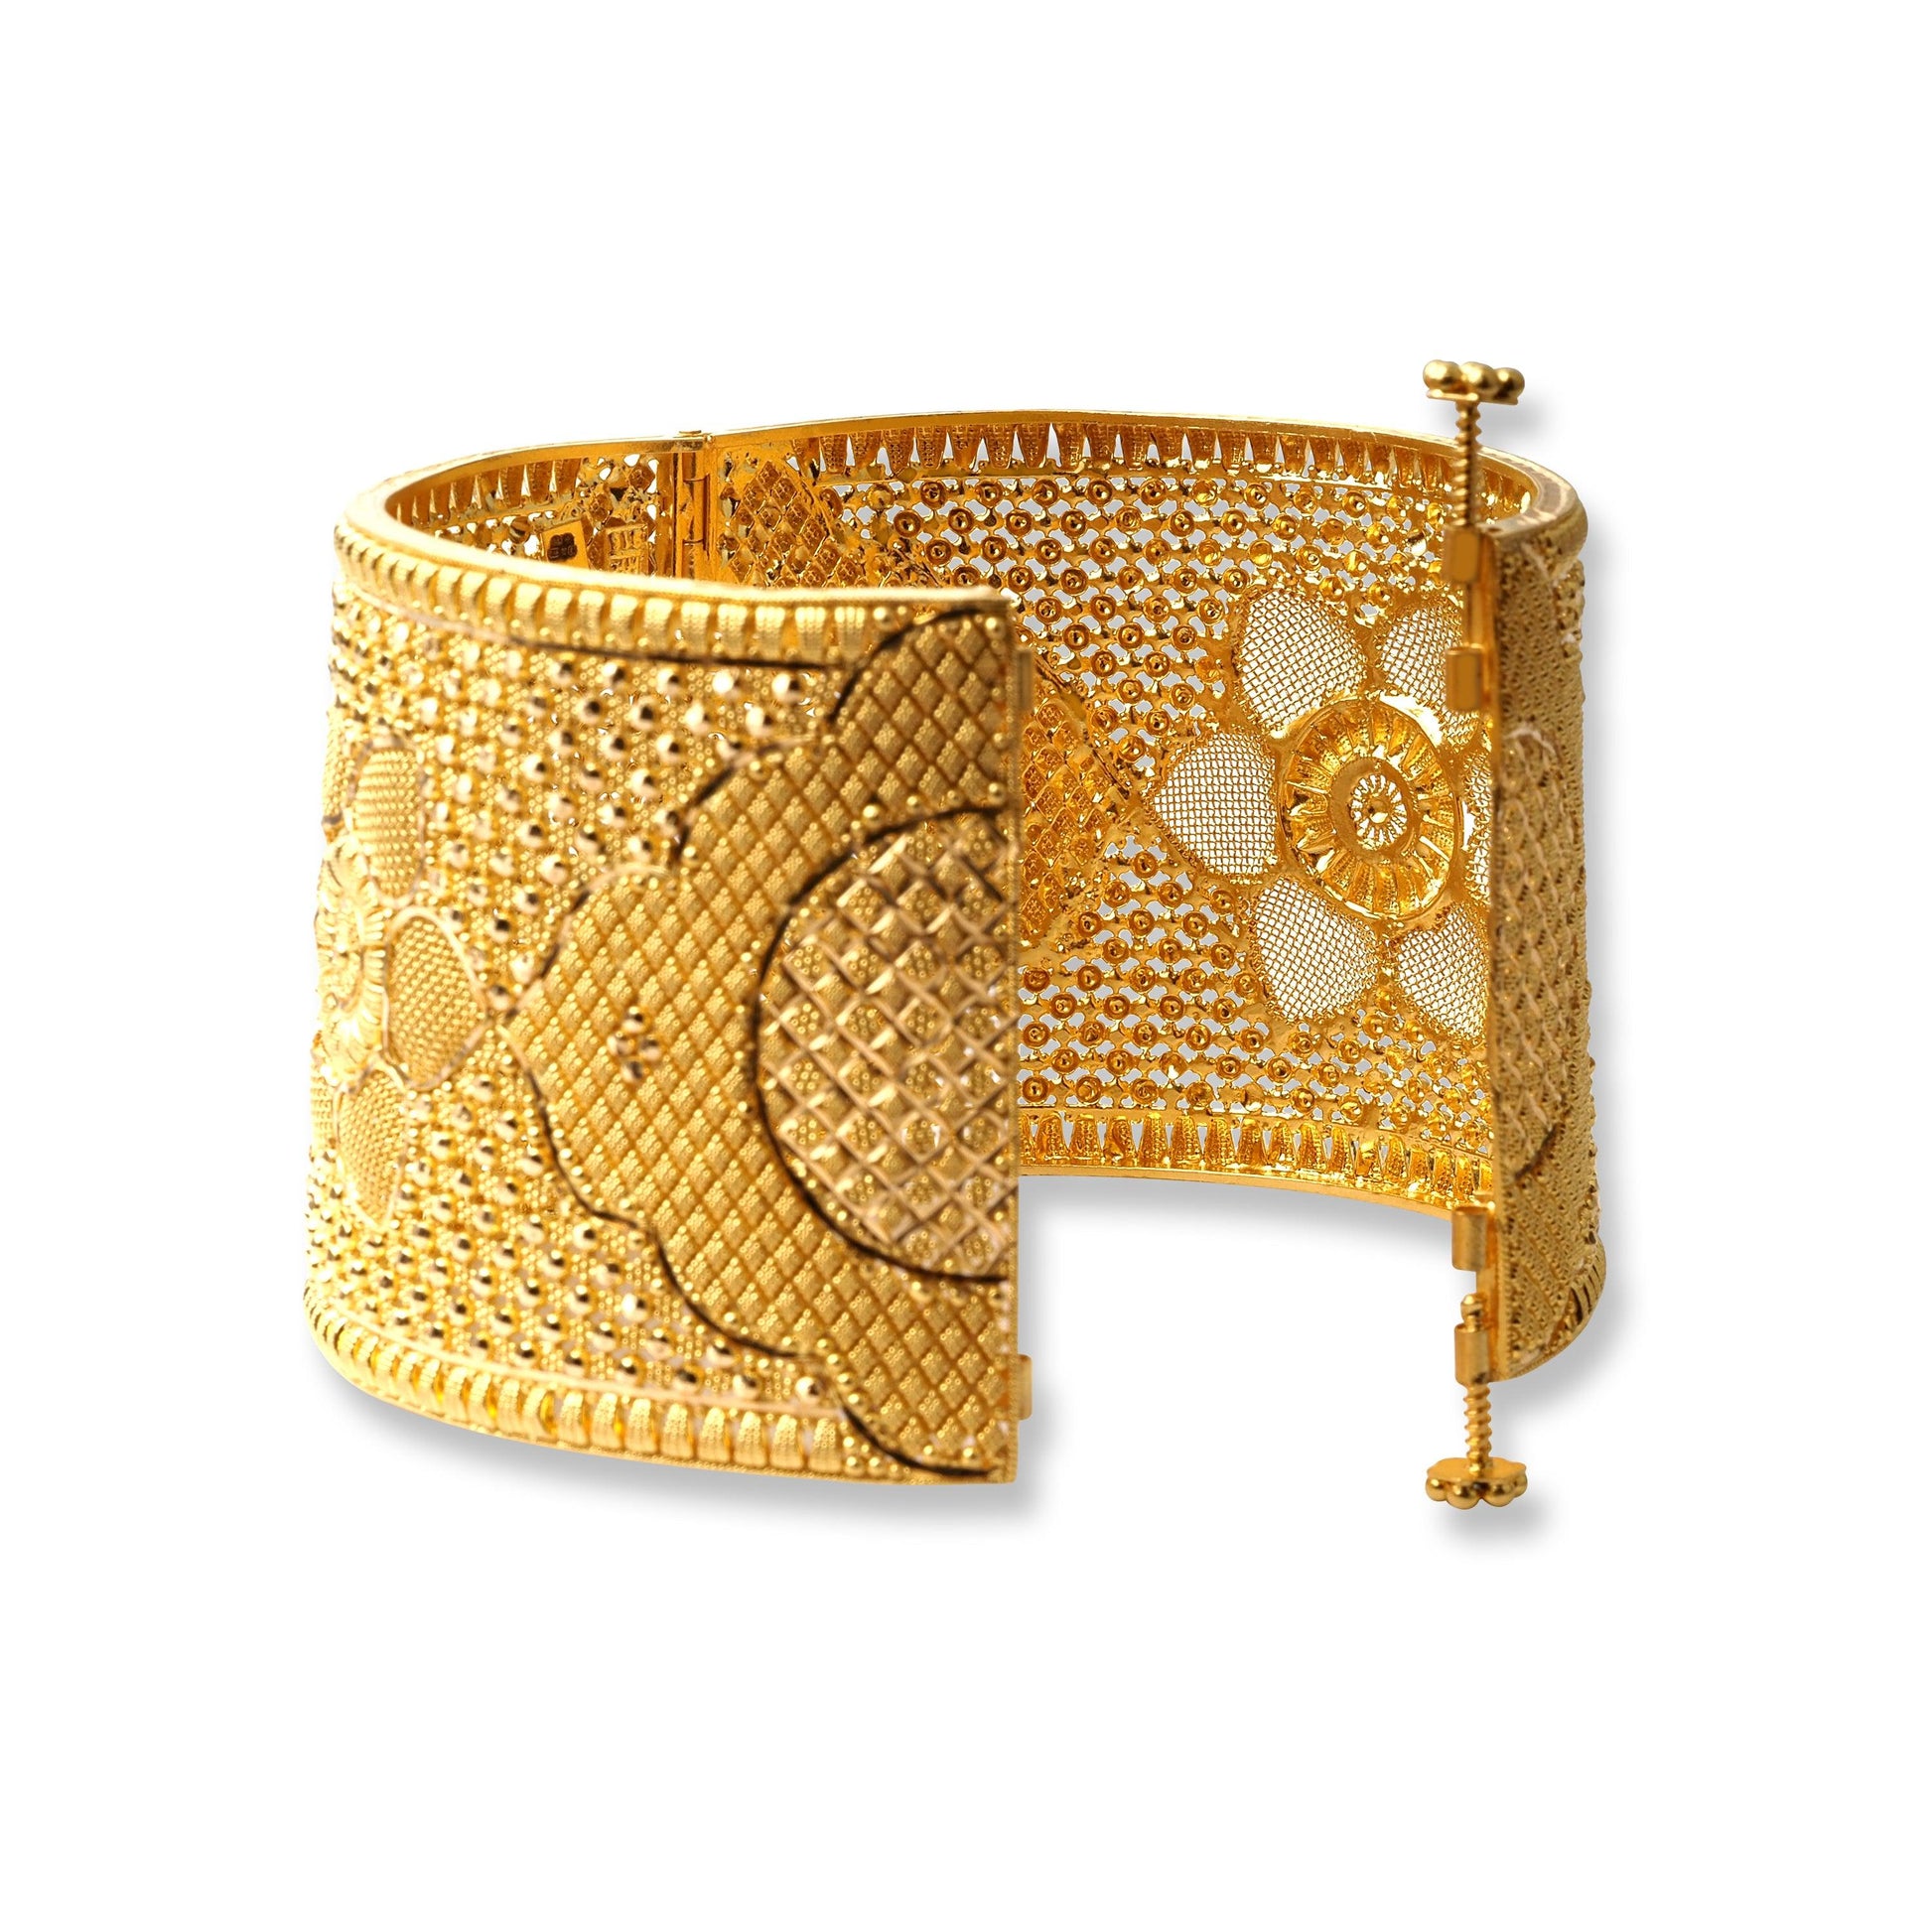 22ct Gold Openable Filigree Design Cuff Bangle with Screw Lock (73.4g) B-8049 - Minar Jewellers